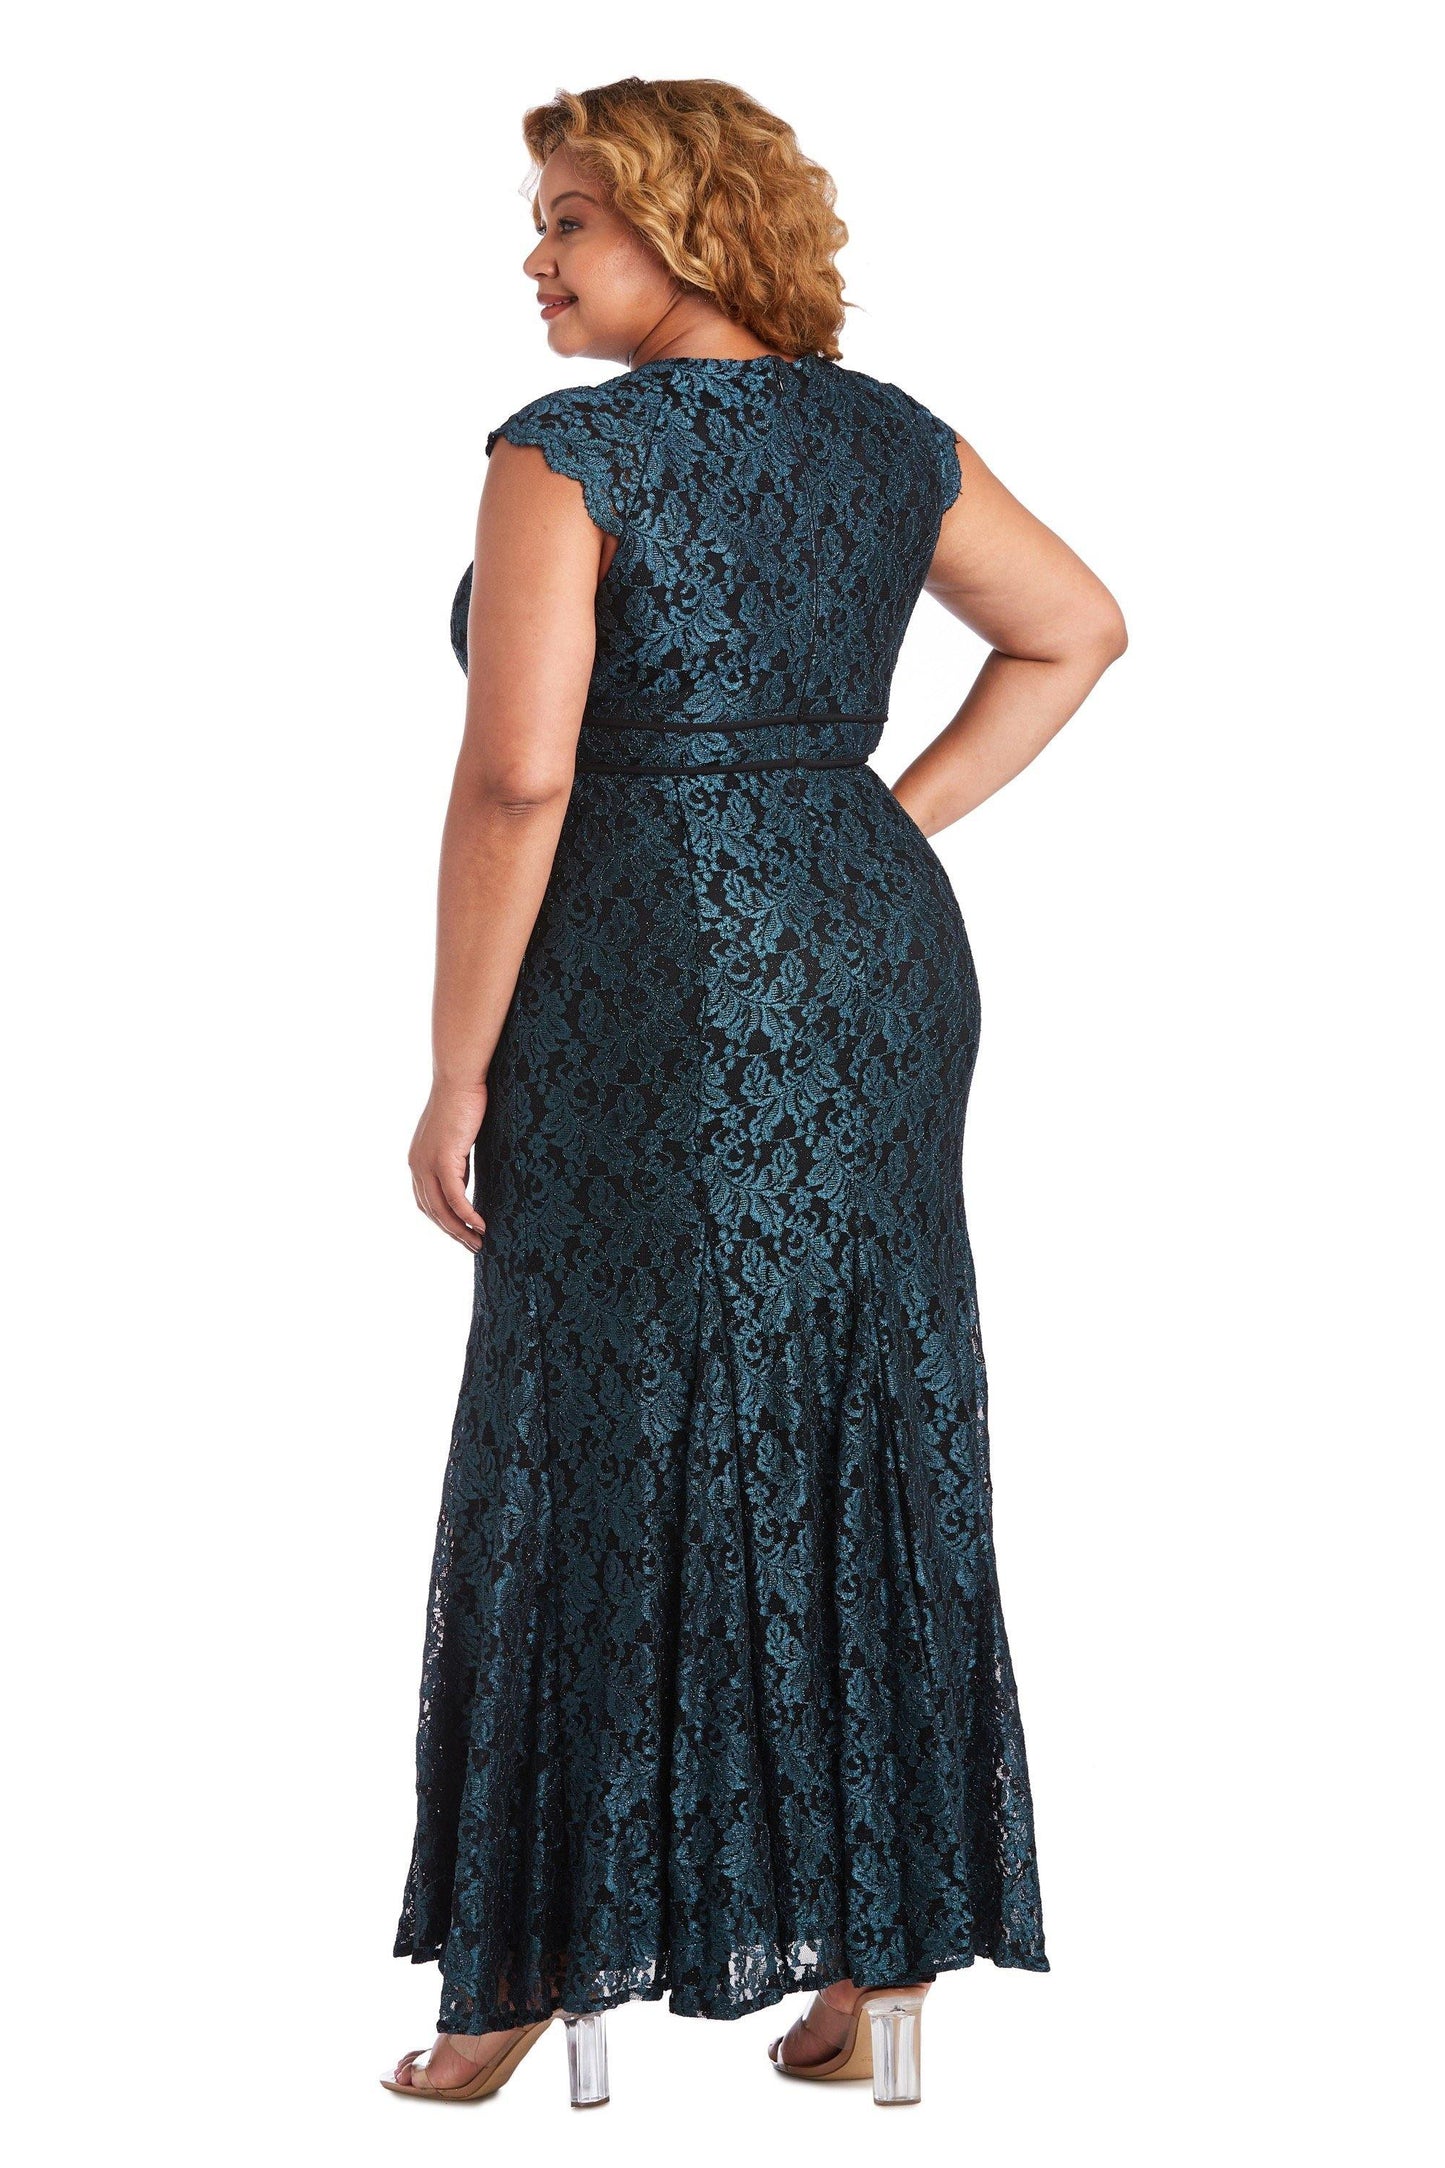 Nightway Plus Size Glitter Lace Long Dress 21699W - The Dress Outlet